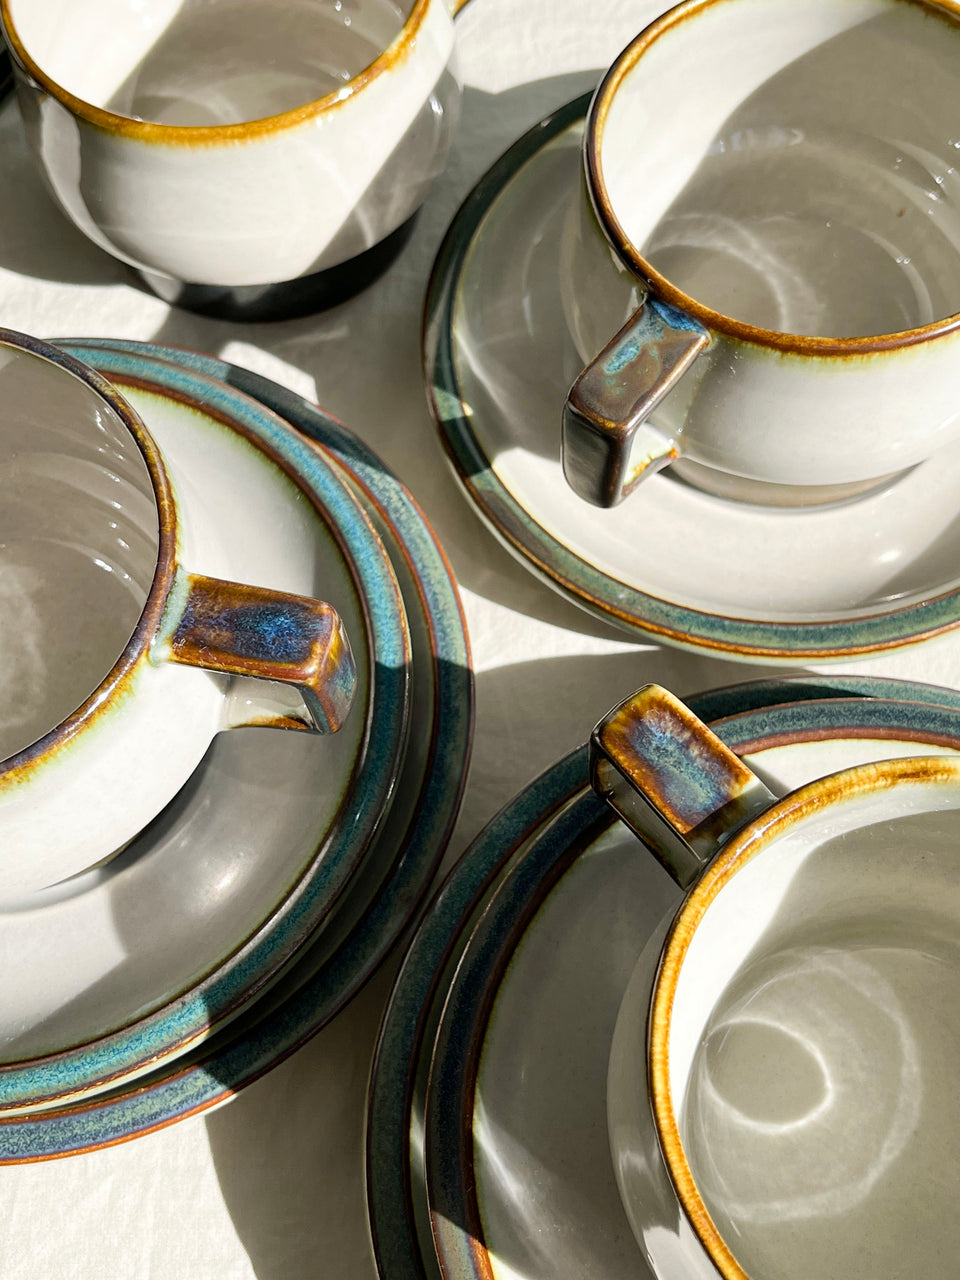 Bing & Grondahl Tema Teacup and Saucer Plate/ビングオーグレンダール ティーマ ティーカップ&ソーサー プレート 北欧食器 デンマークヴィンテージ